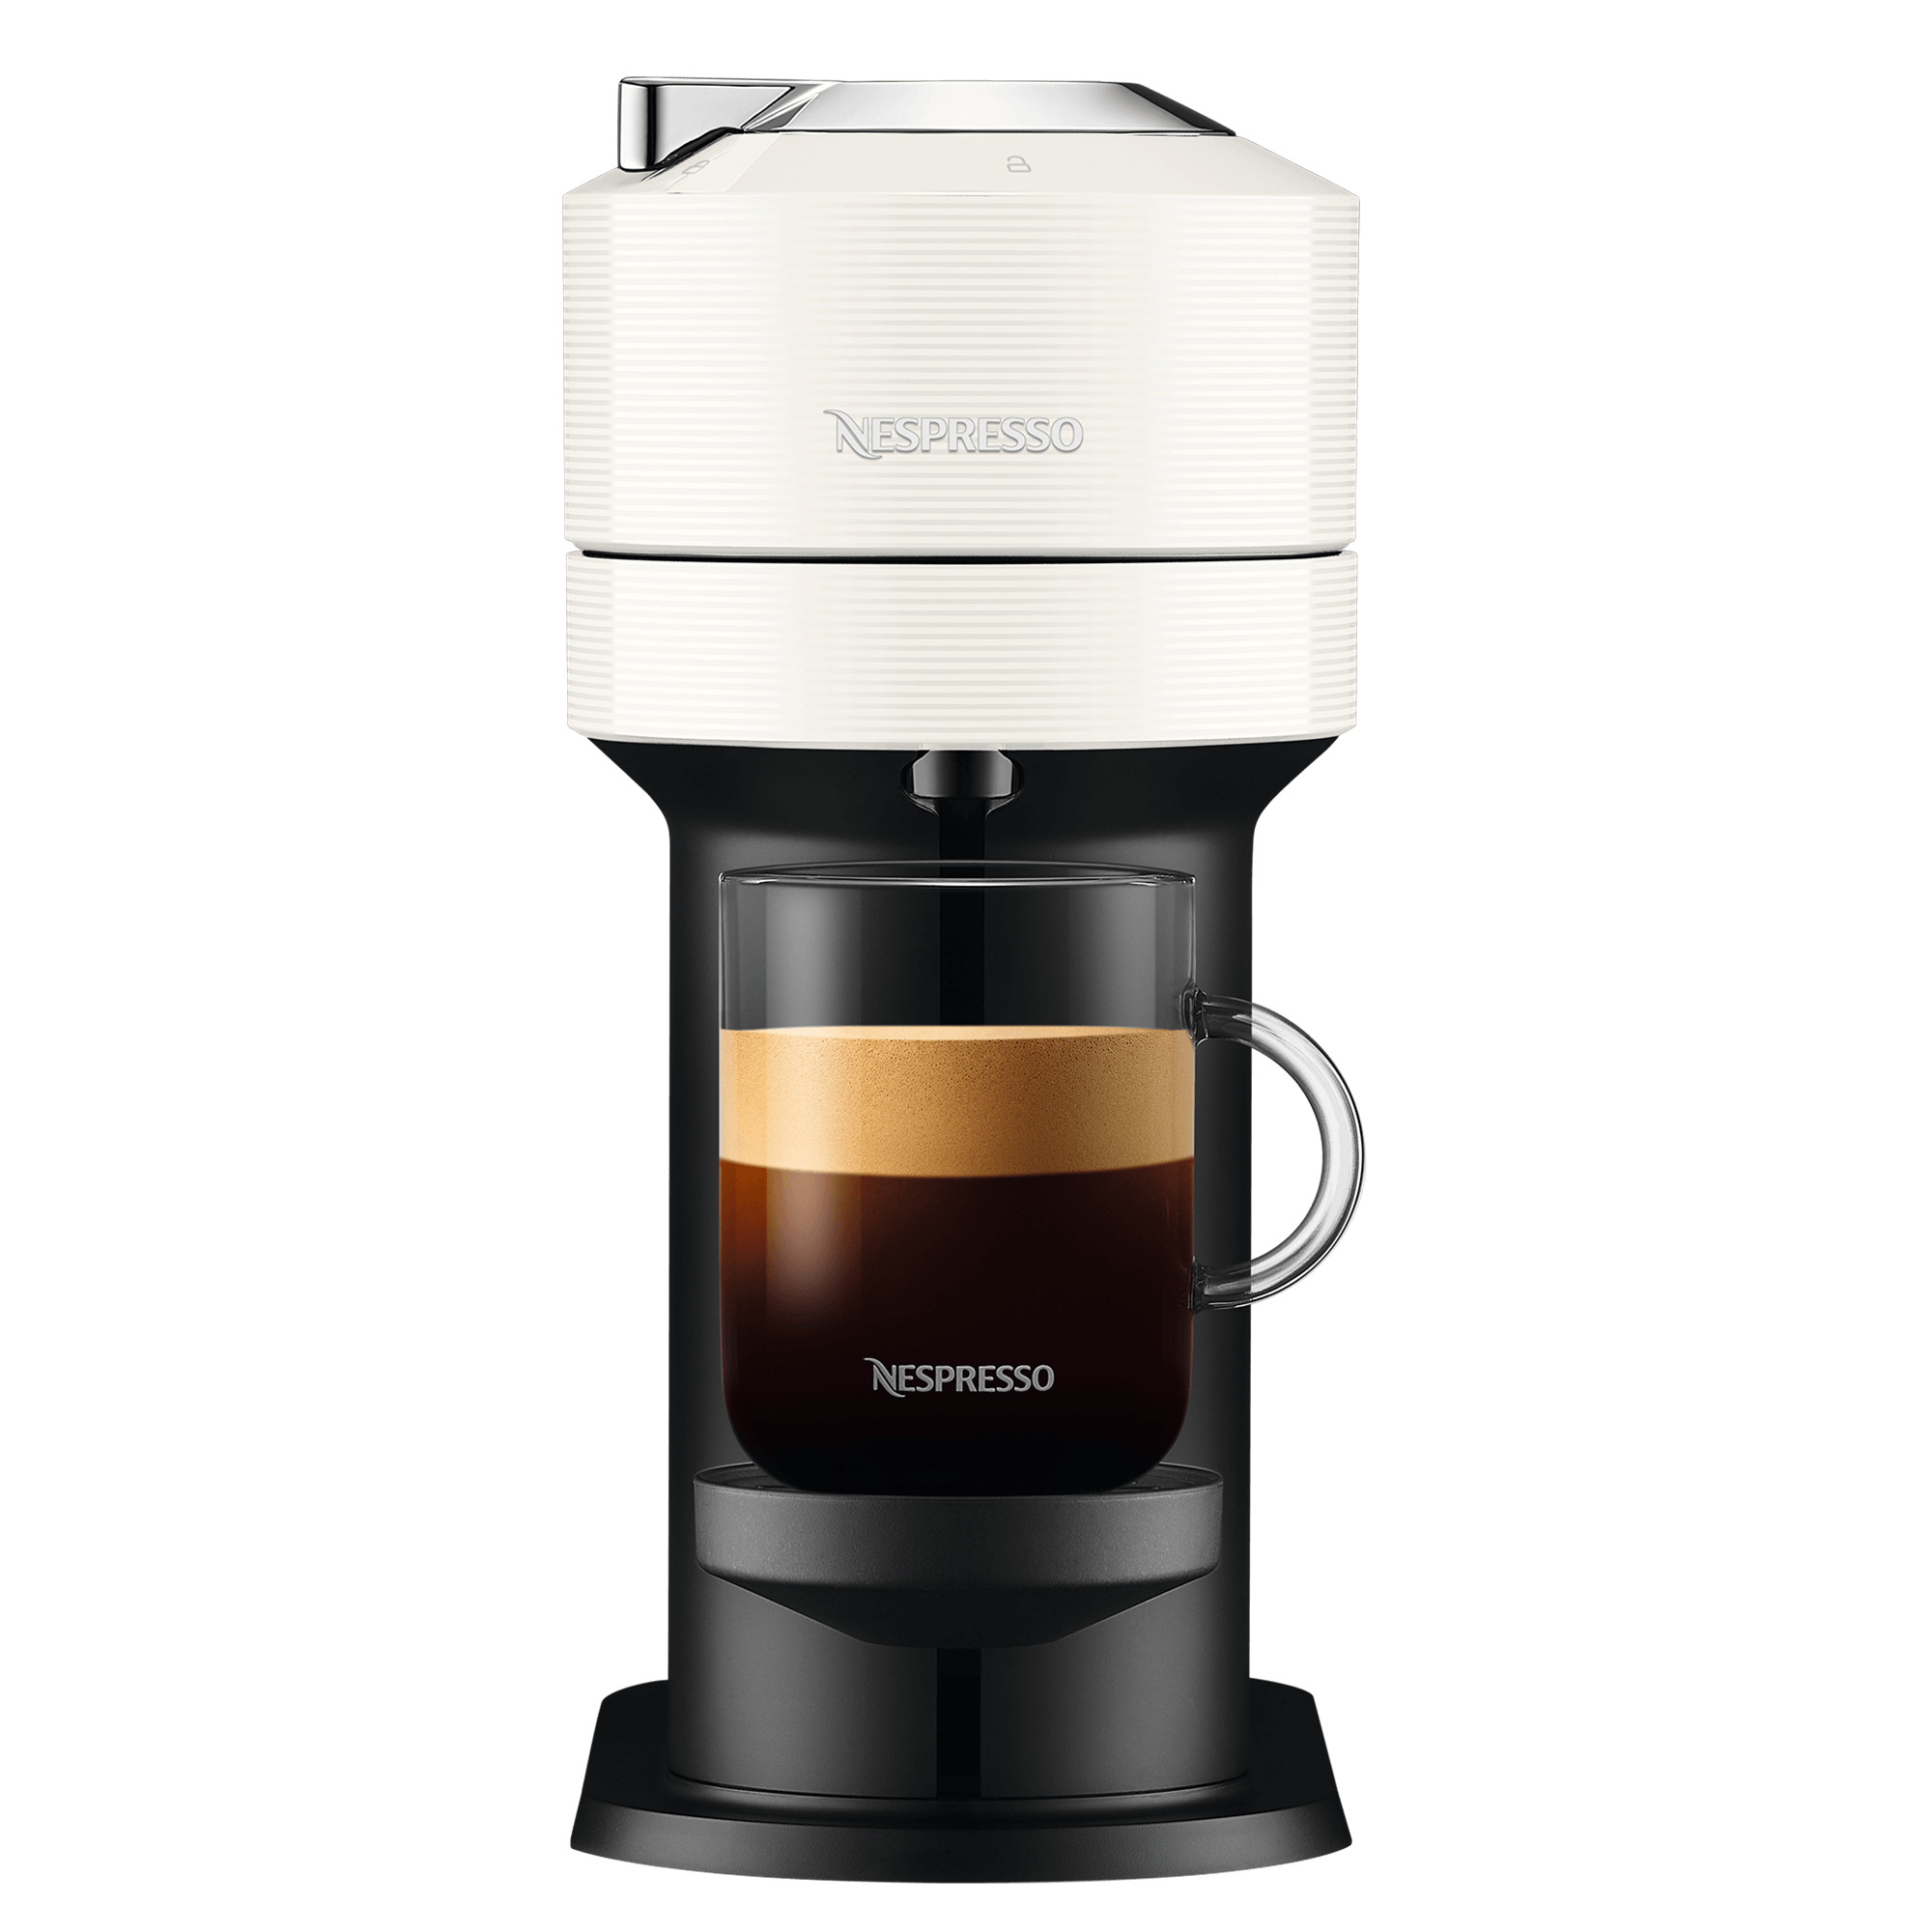 Nespresso Vertuo Next Bundle Coffee Maker and Espresso Machine by Breville  - Red